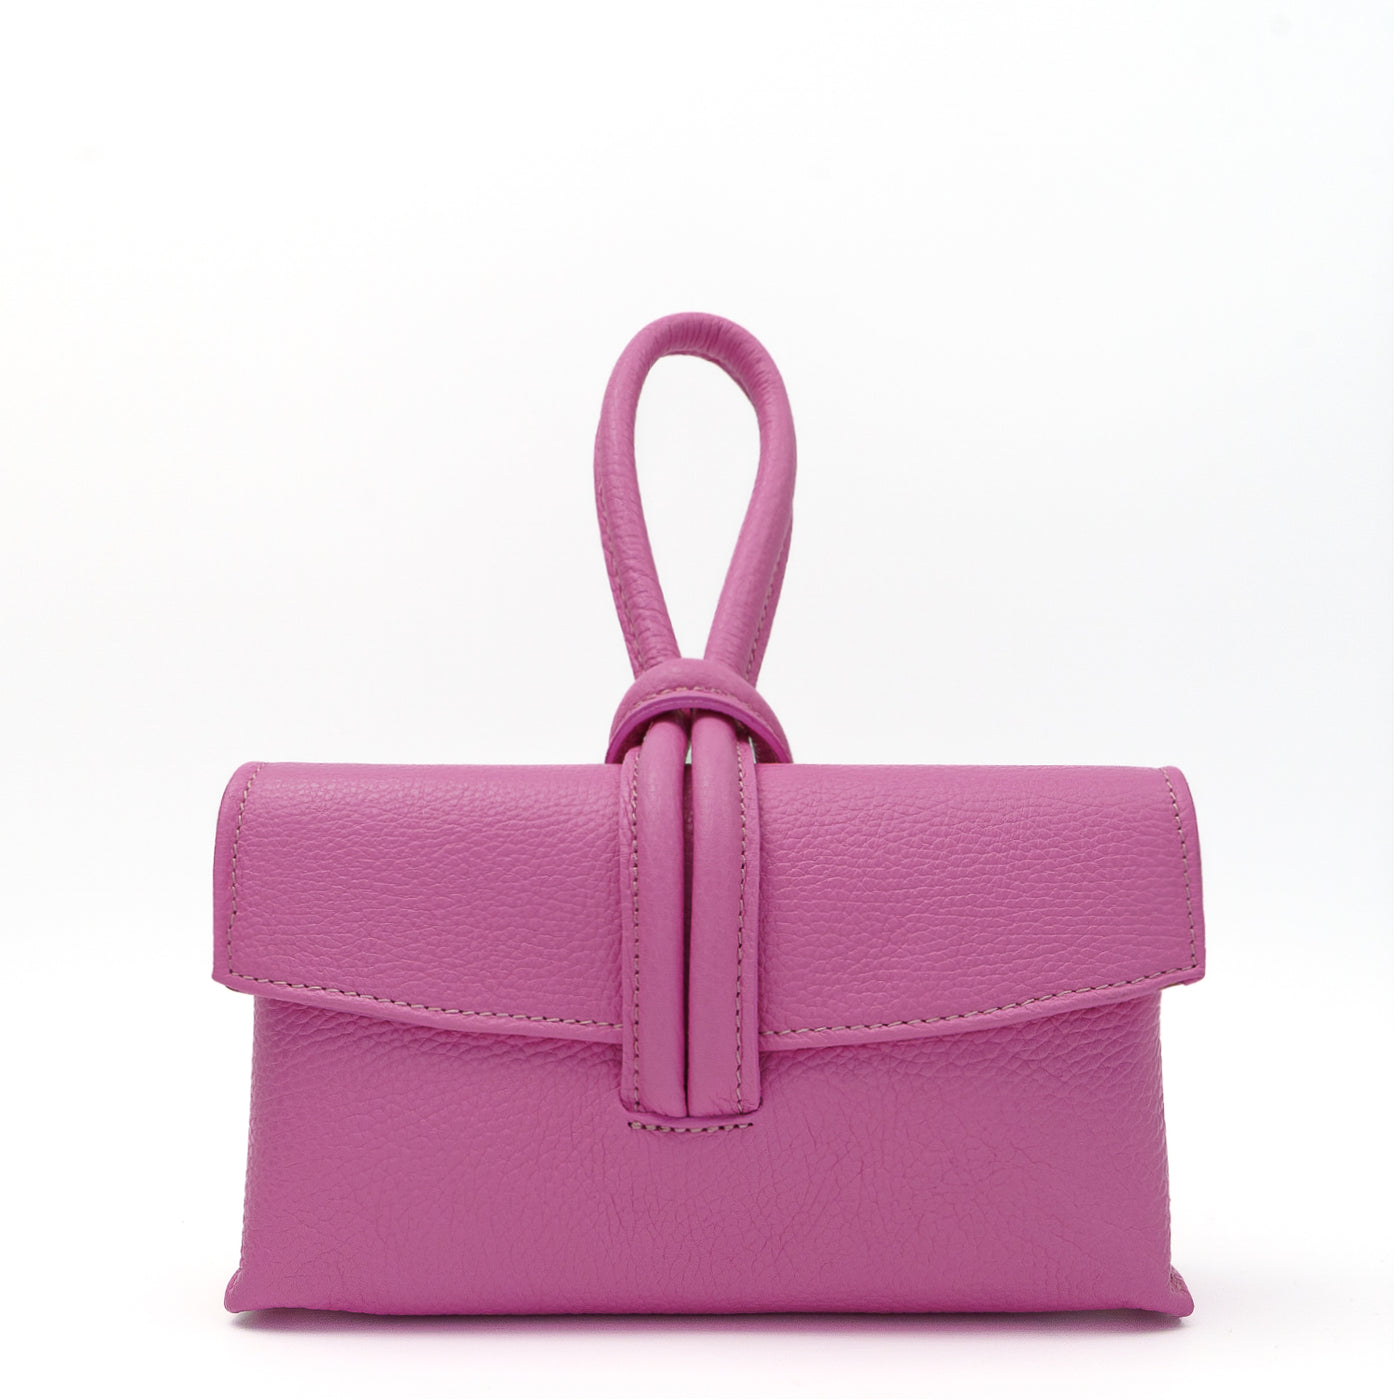 Leather bag "Barletta" Light pink